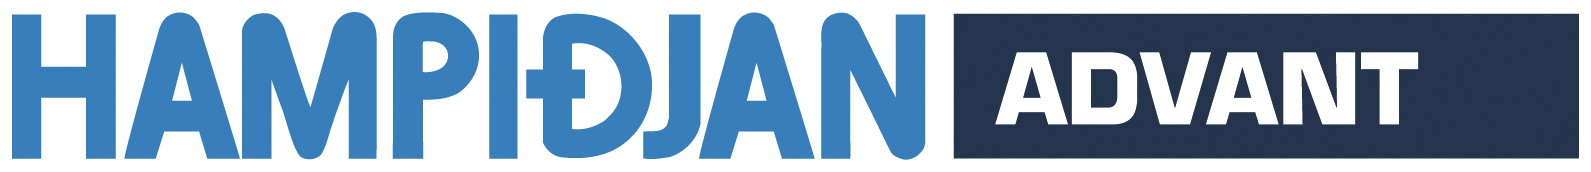 hampidjan Advant offshore logo.jpg